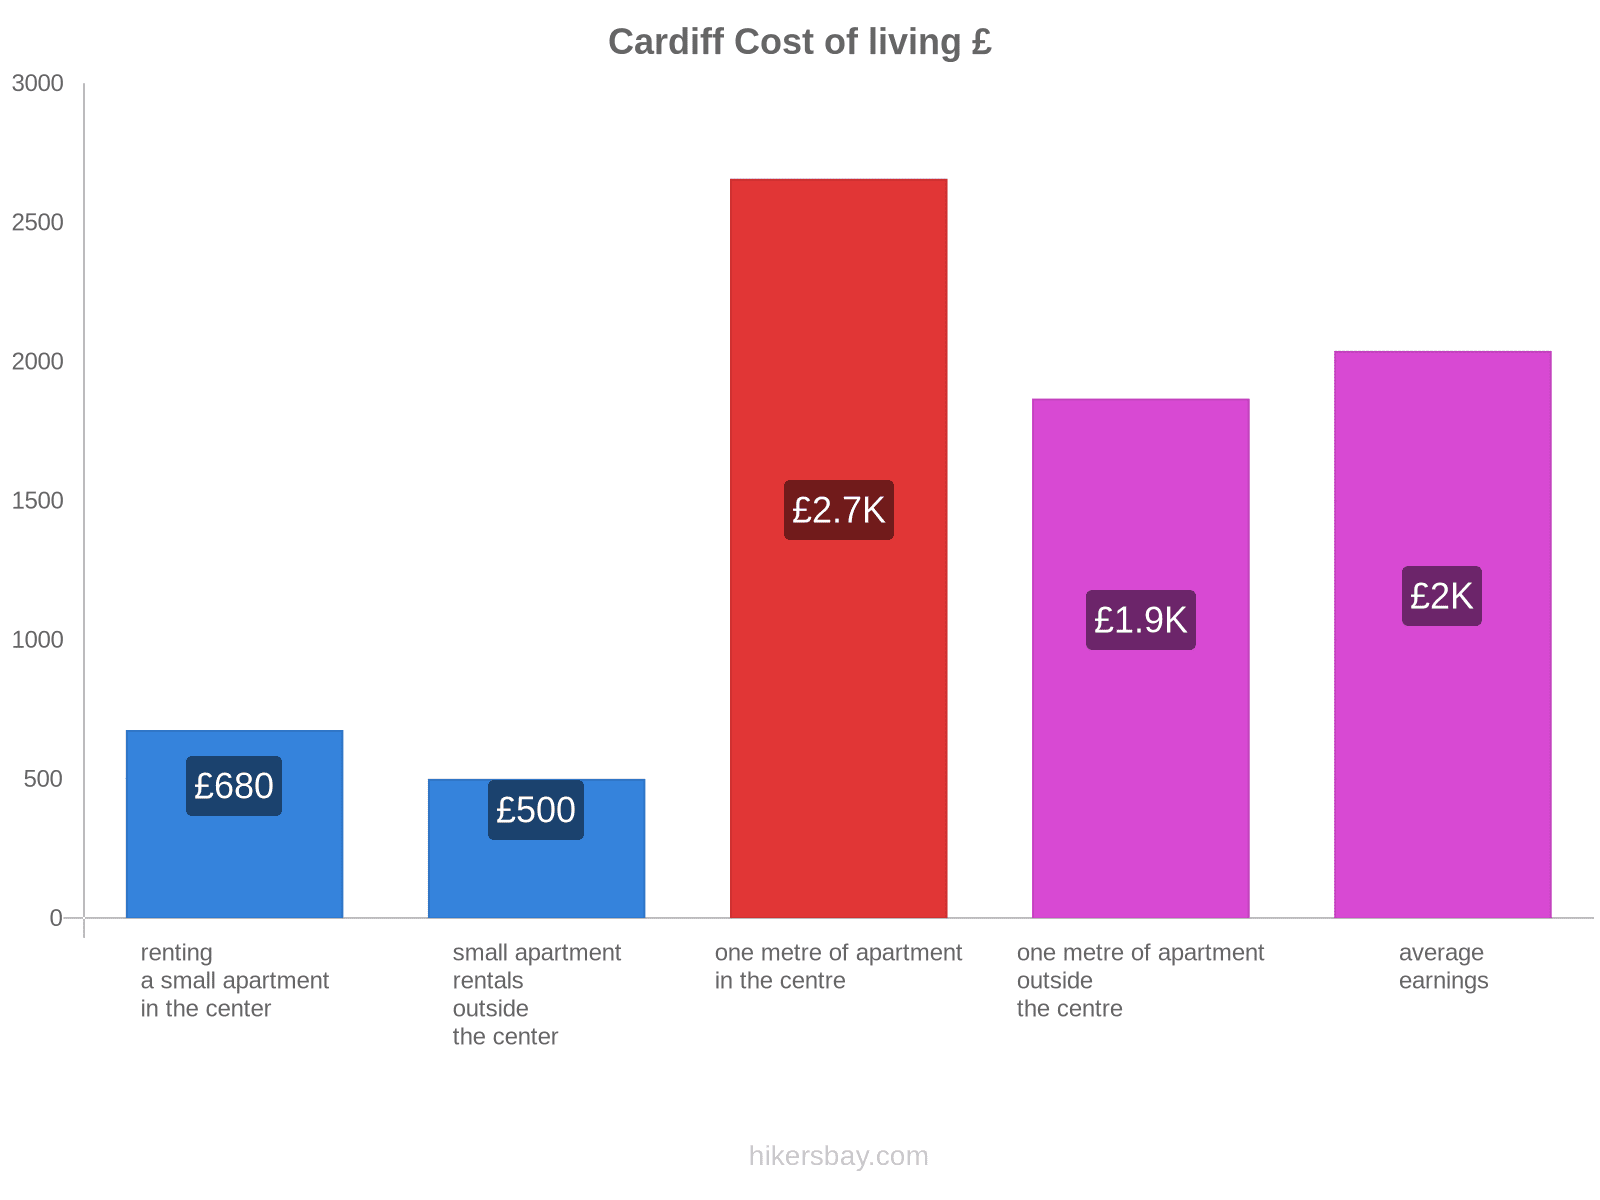 Cardiff cost of living hikersbay.com